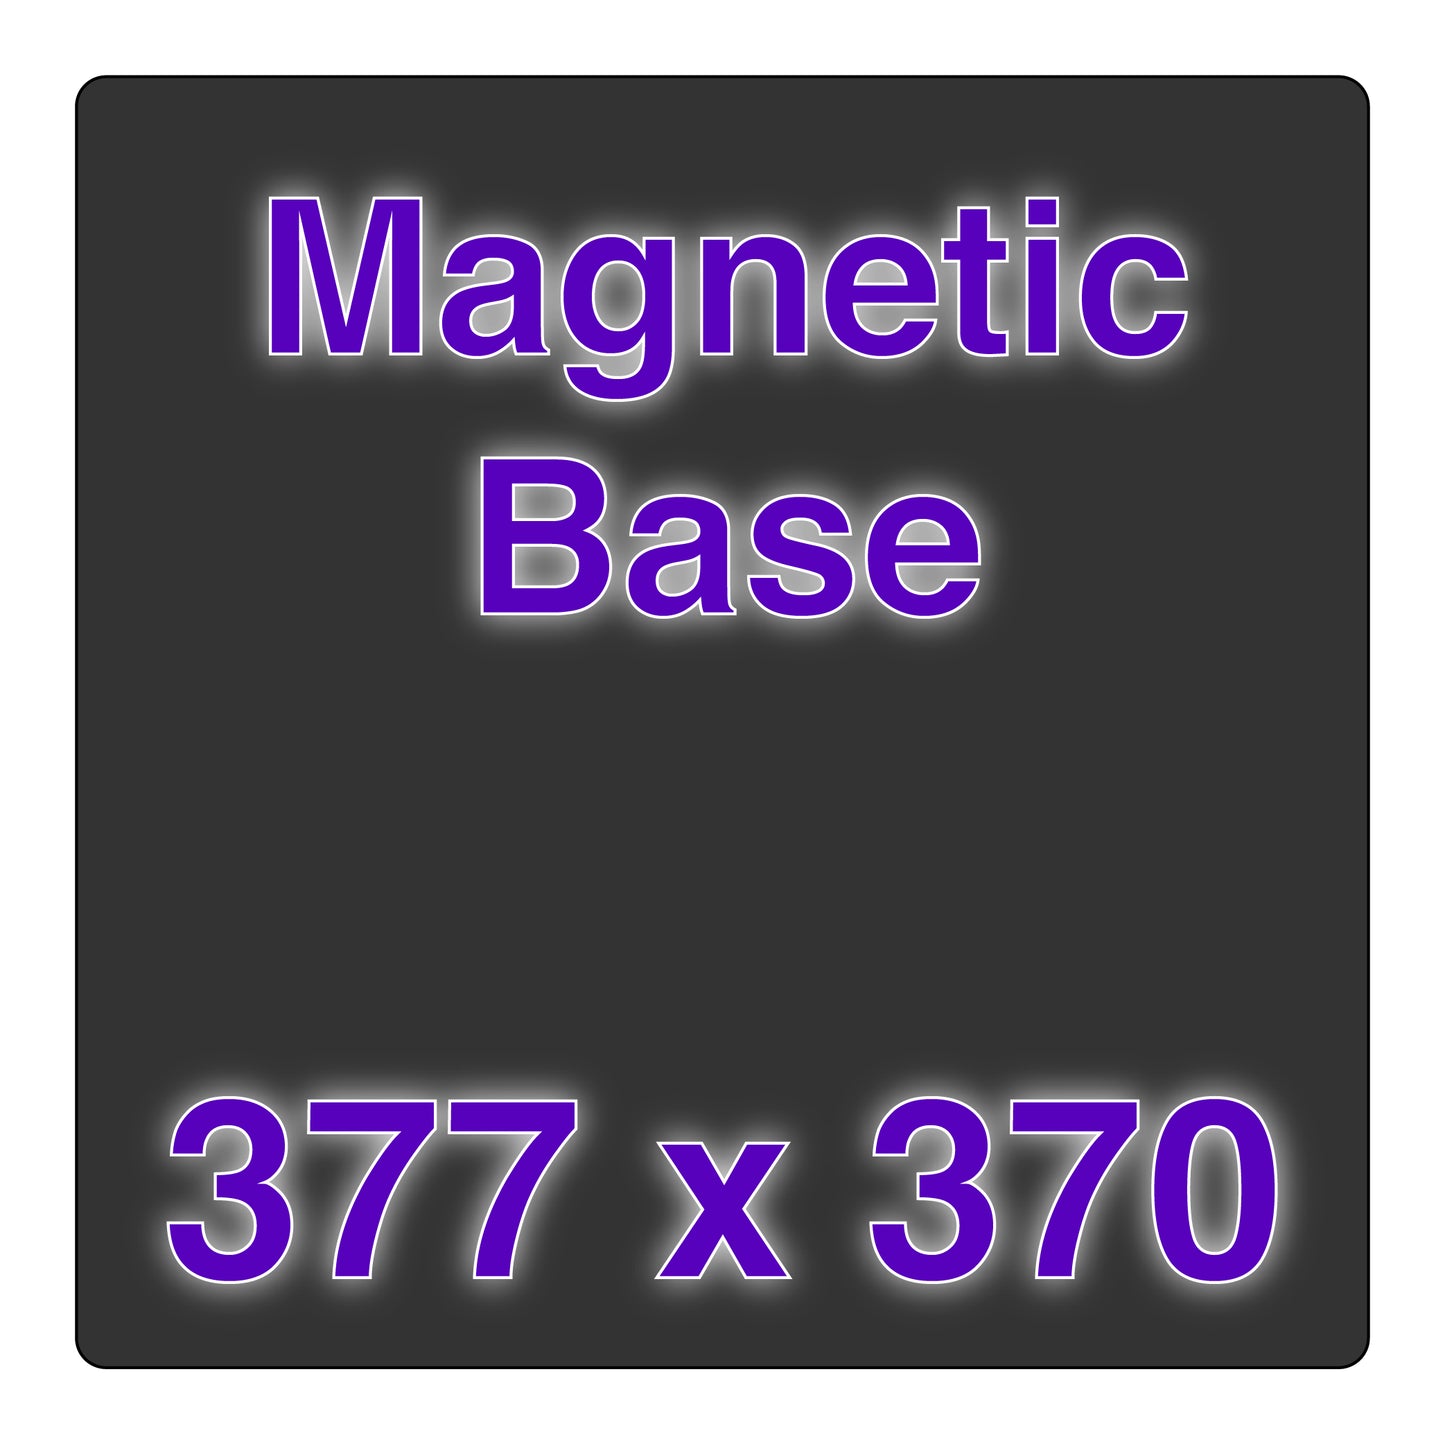 Magnetic Base - 377 x 370